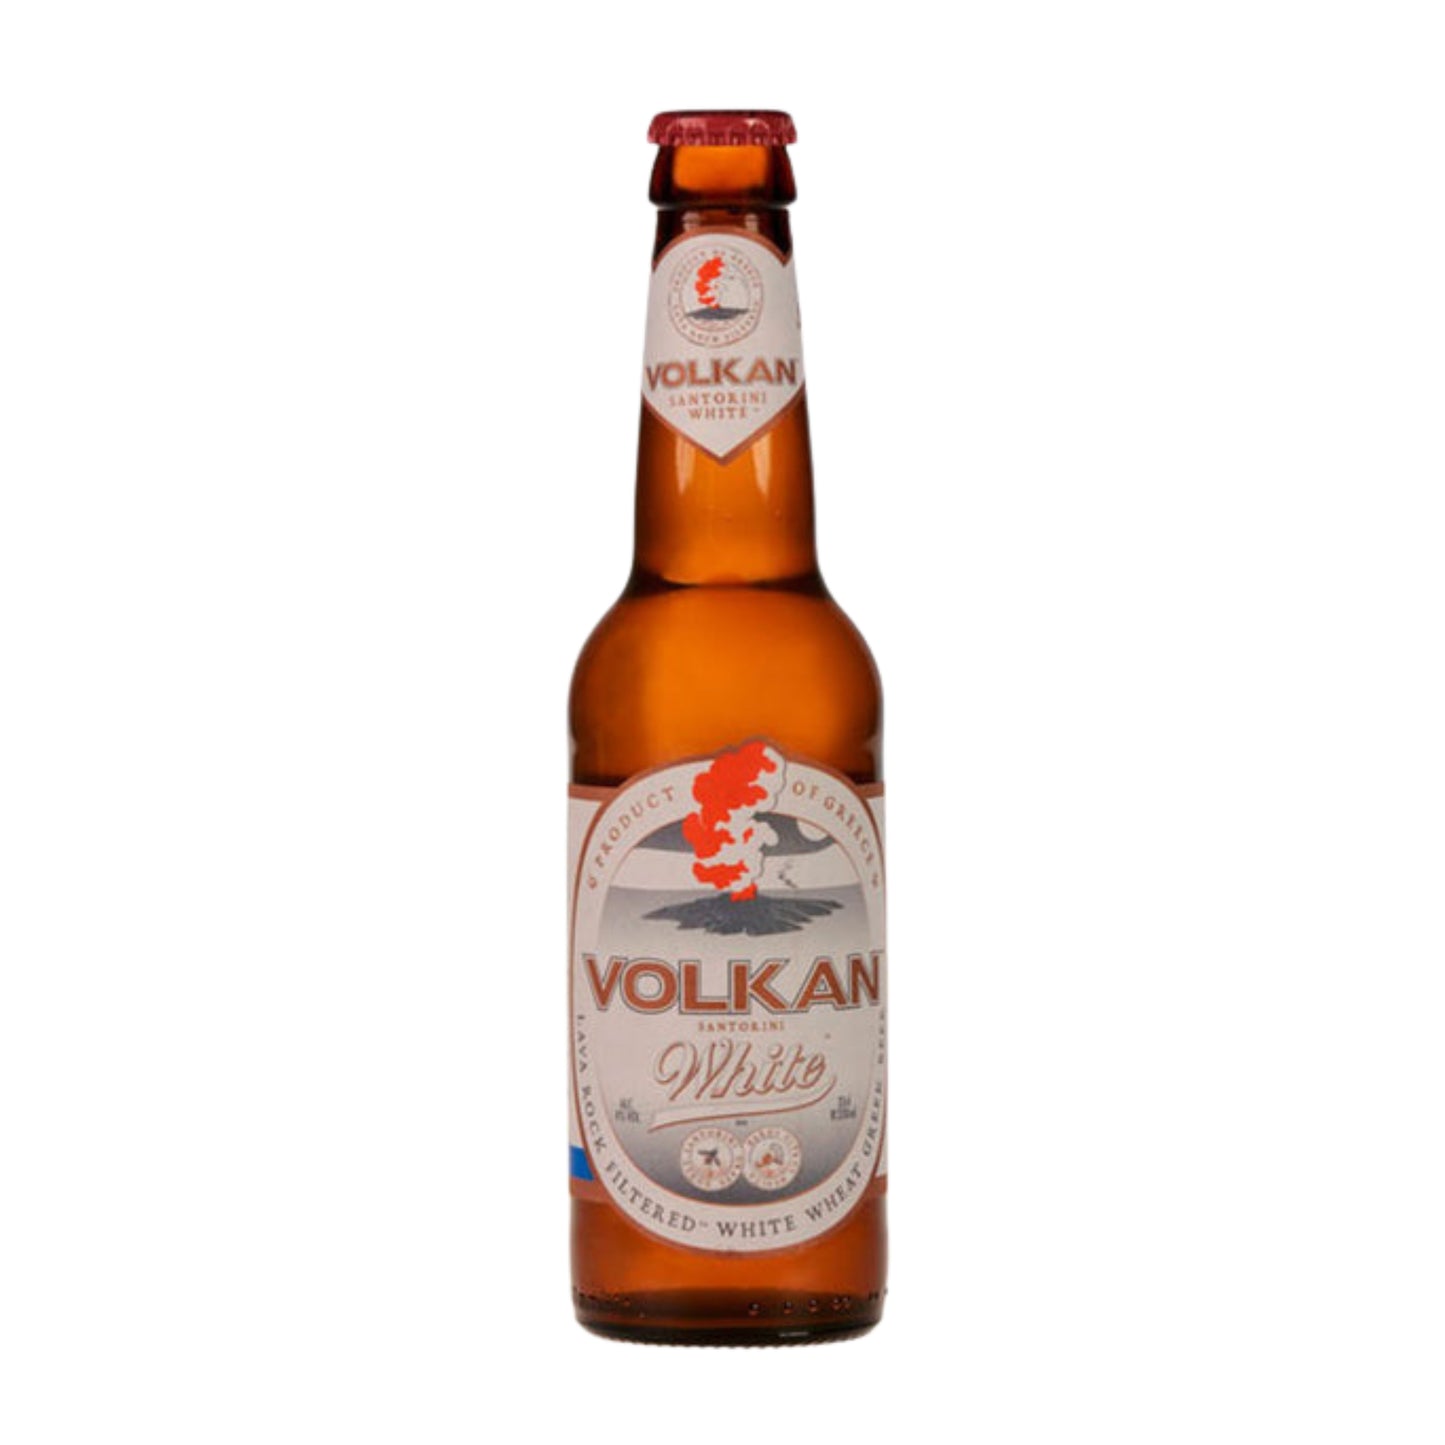 Volkan Santorini white beer - 330ml